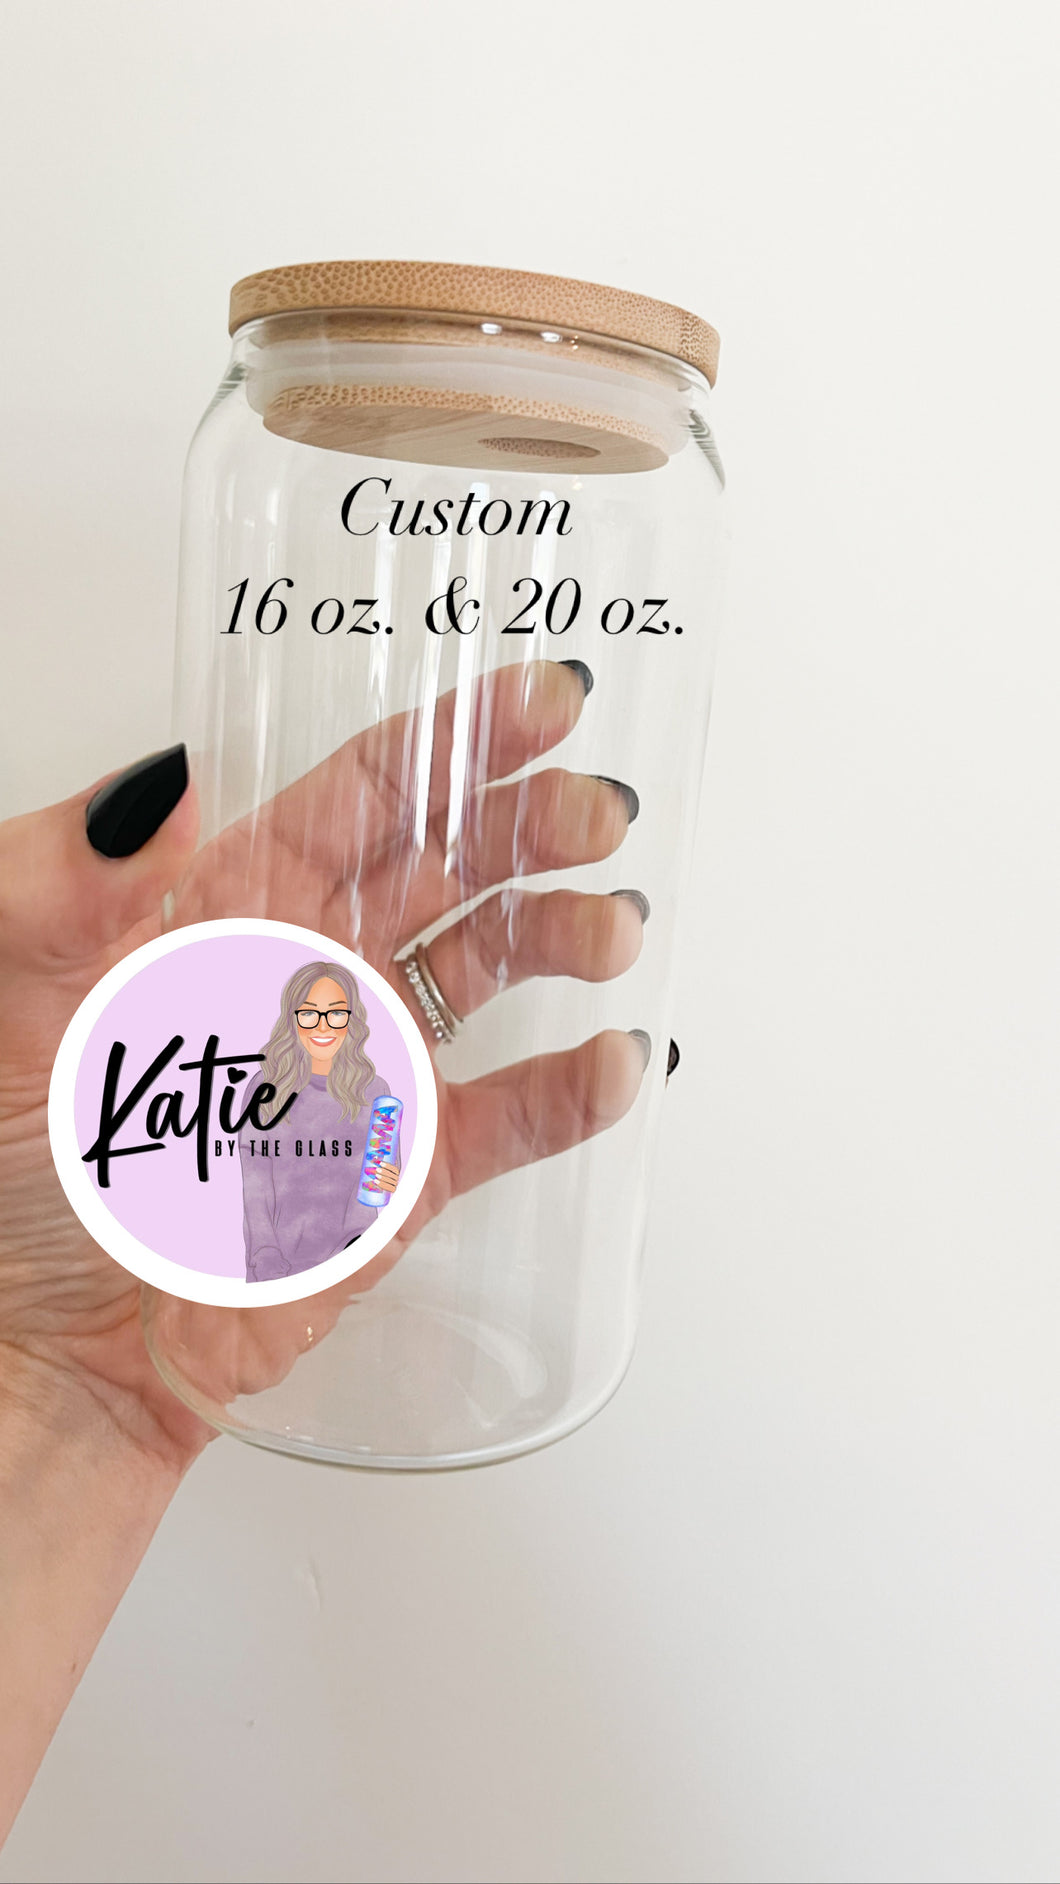 Custom Glass Can